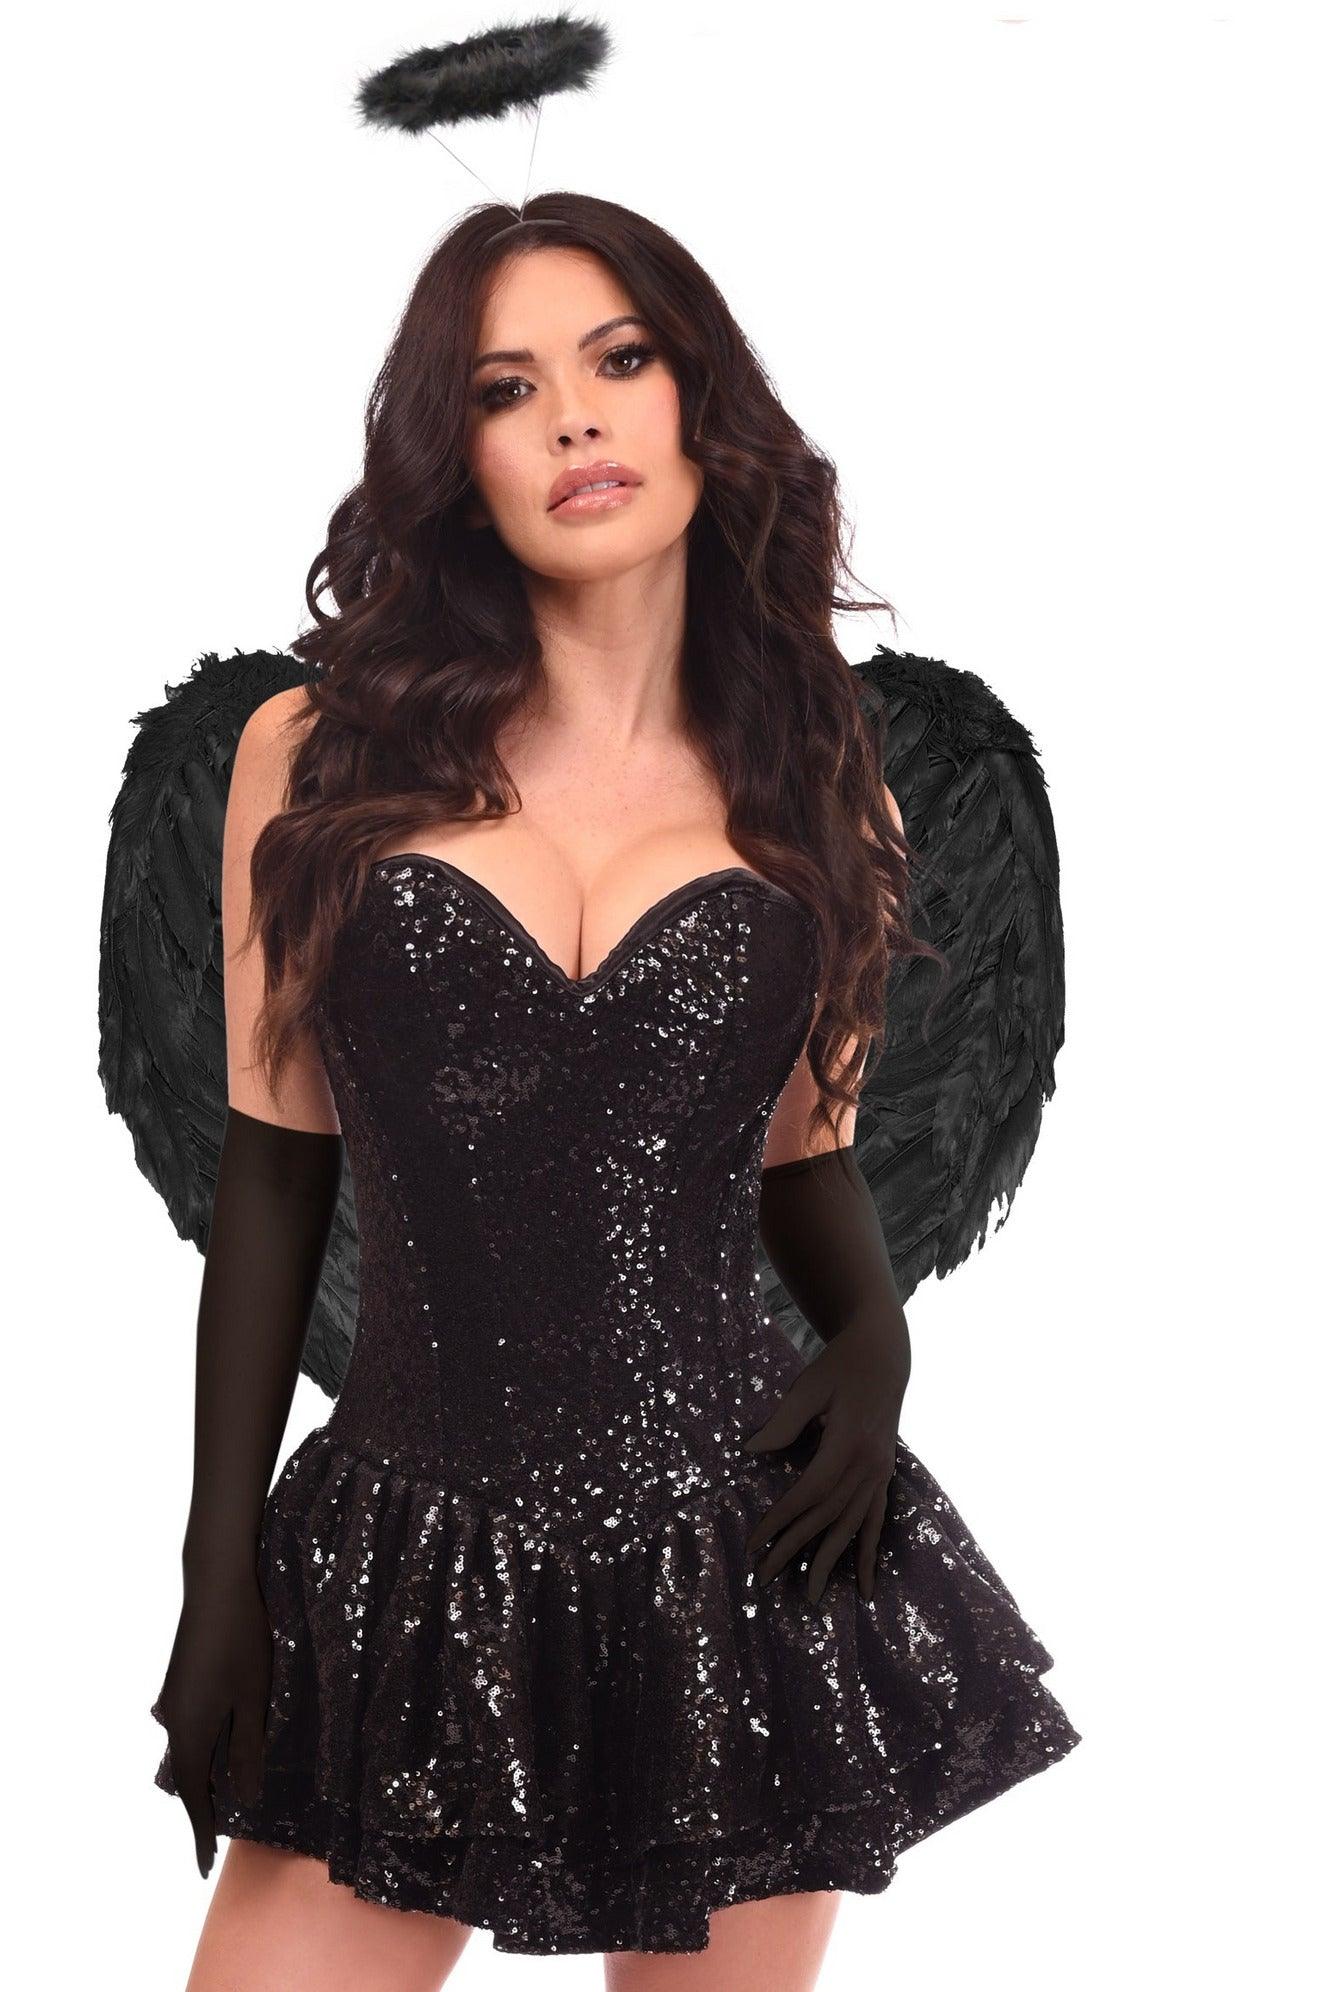 Top Drawer 4 PC Sequin Dark Angel Corset Dress Costume - AMIClubwear